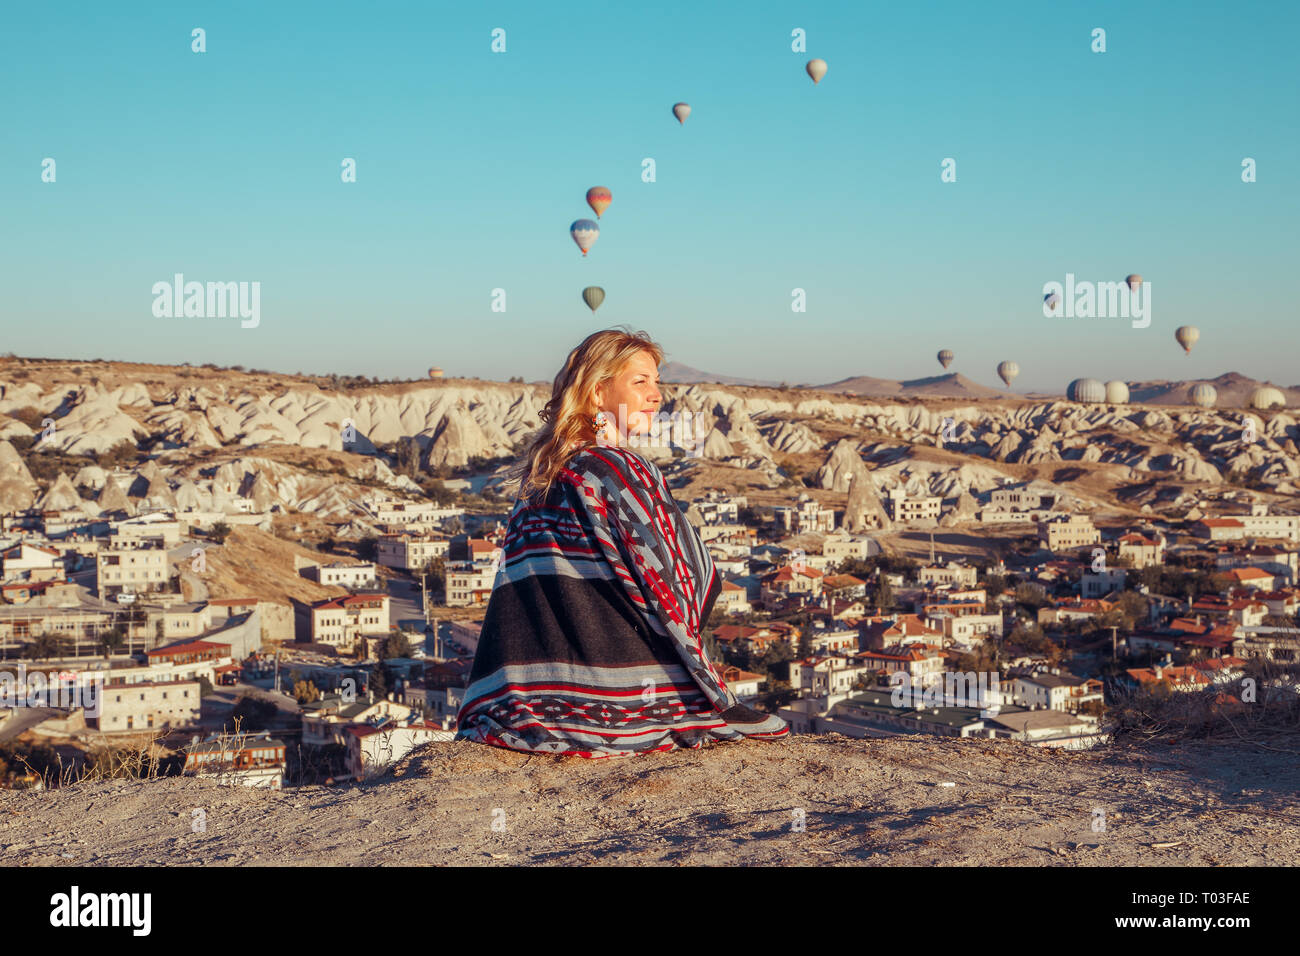 Girl at dawn watching the balloons and enjoying life. Cappadocia, Goreme, Turkey - September 24, 2018. Stock Photo